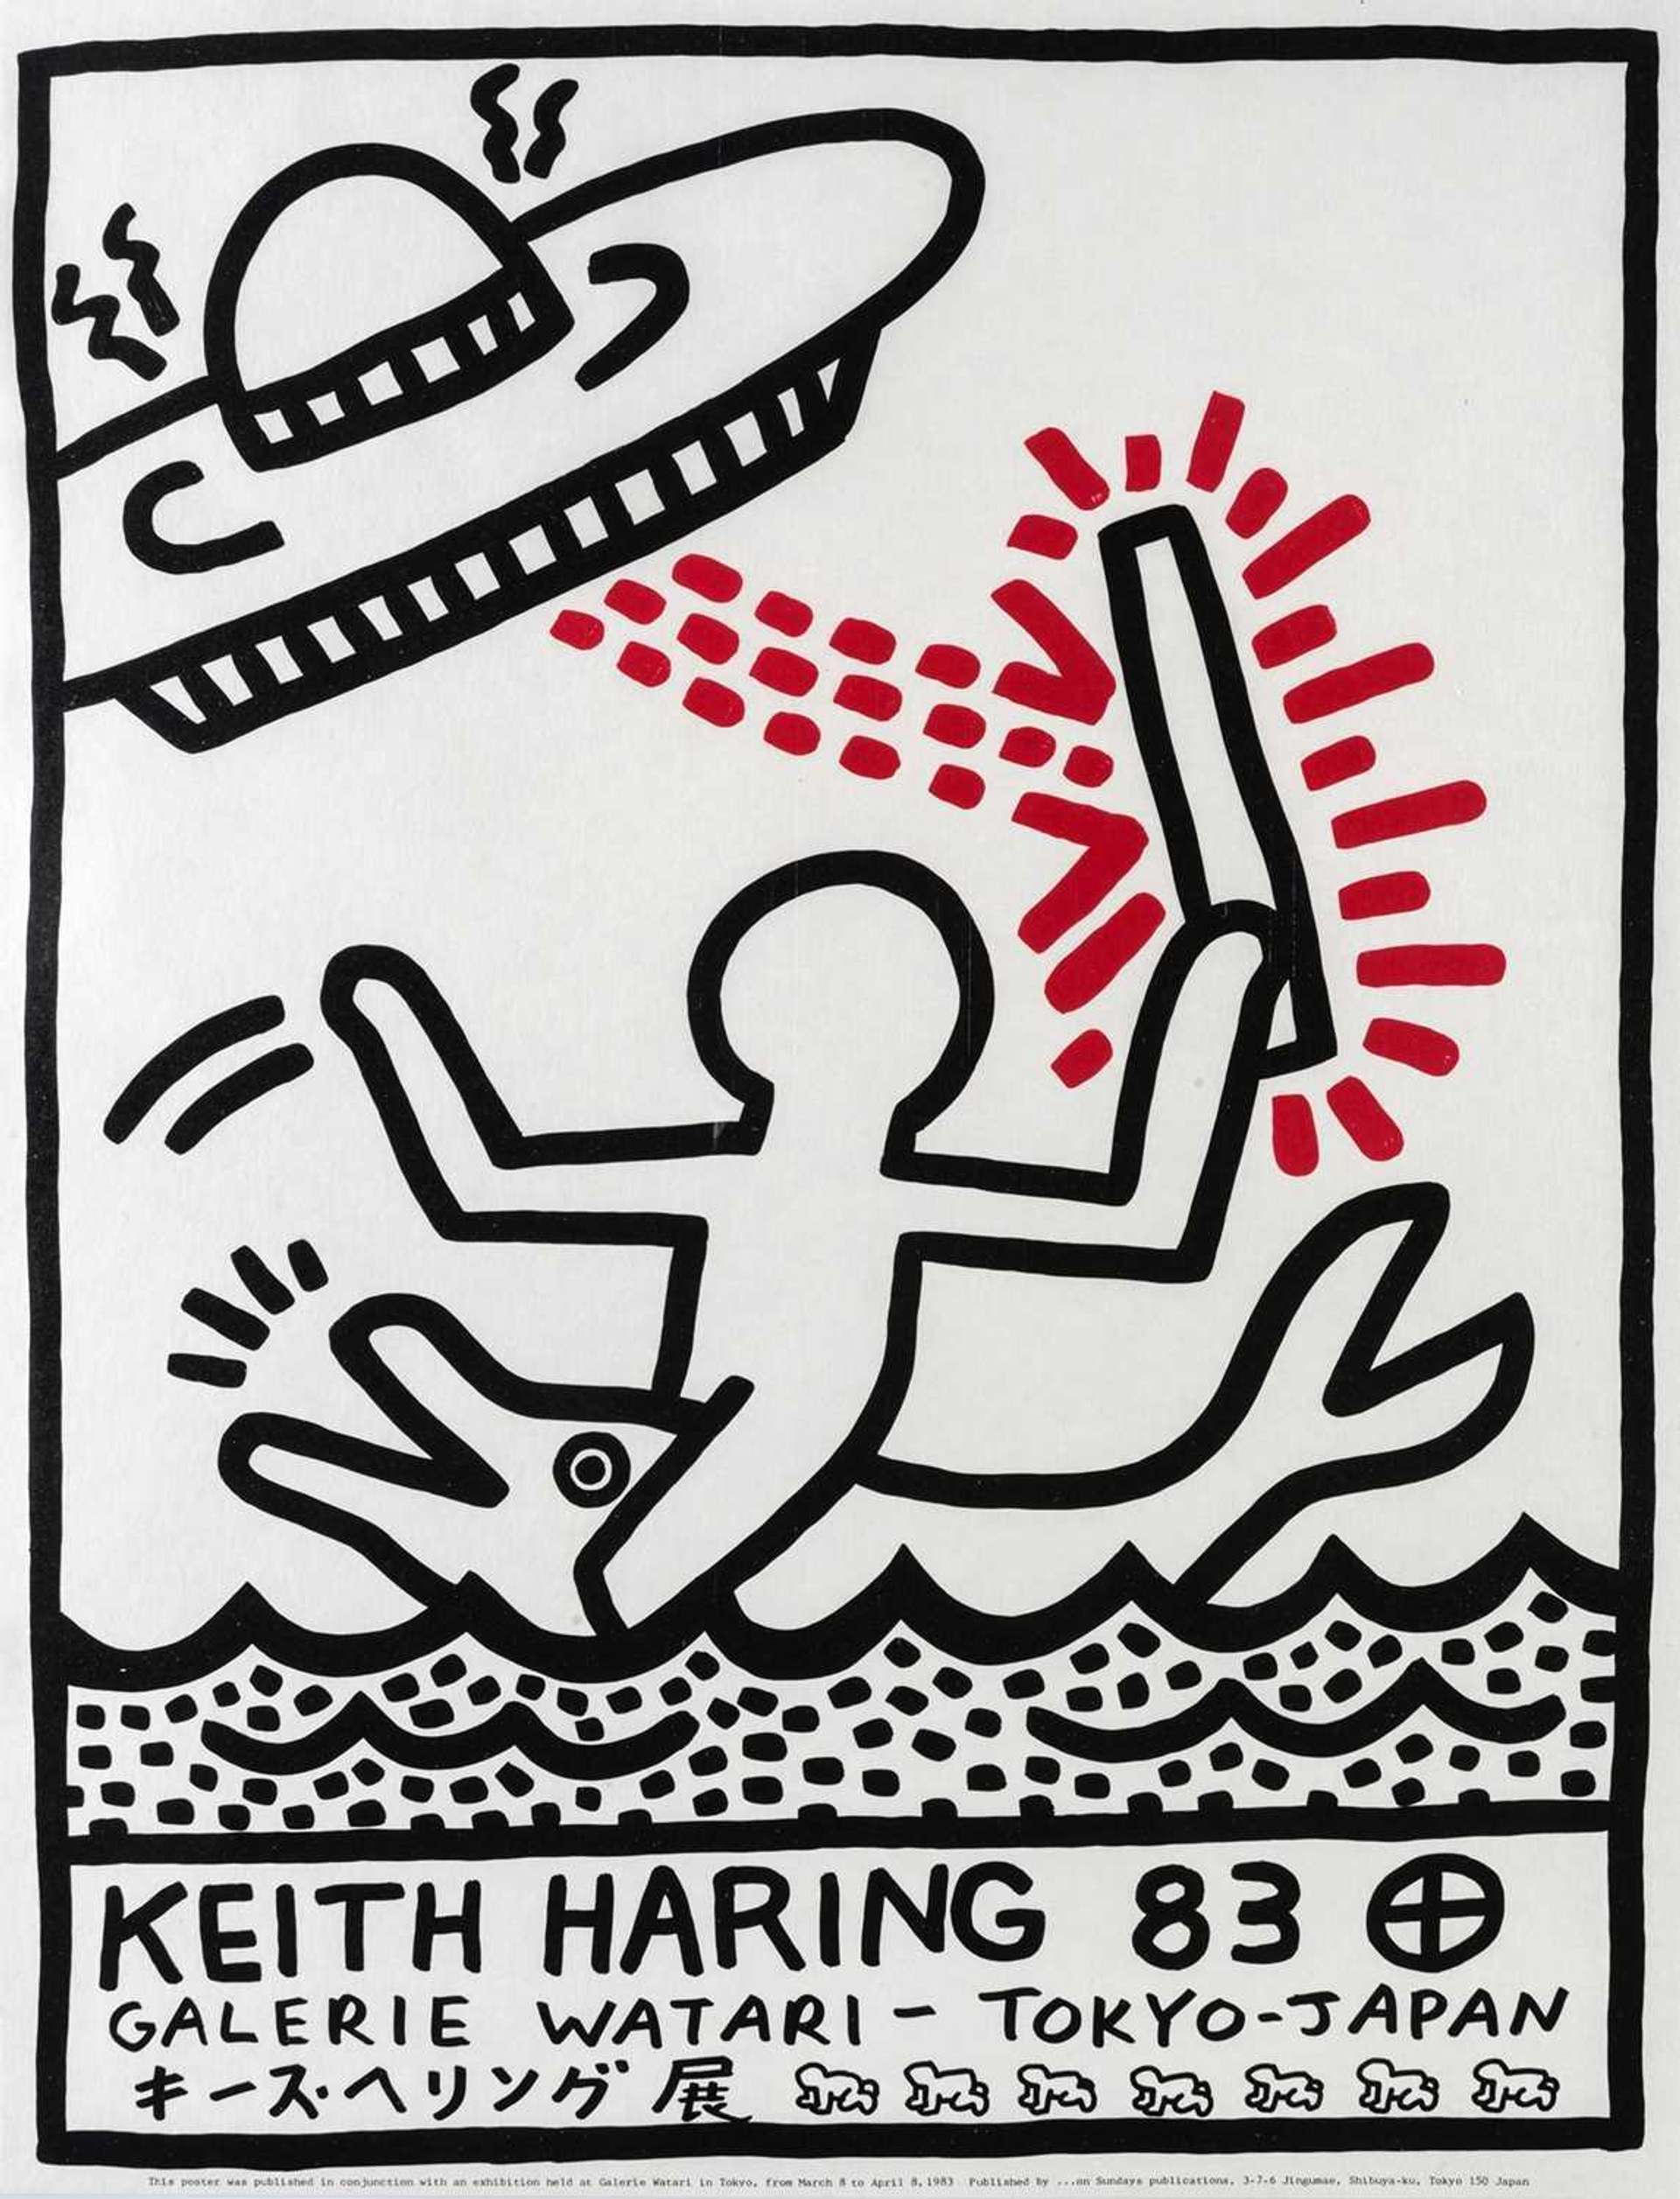 Galerie Watari Exhibition Tokyo Poster - Unsigned Print by Keith Haring 1983 - MyArtBroker